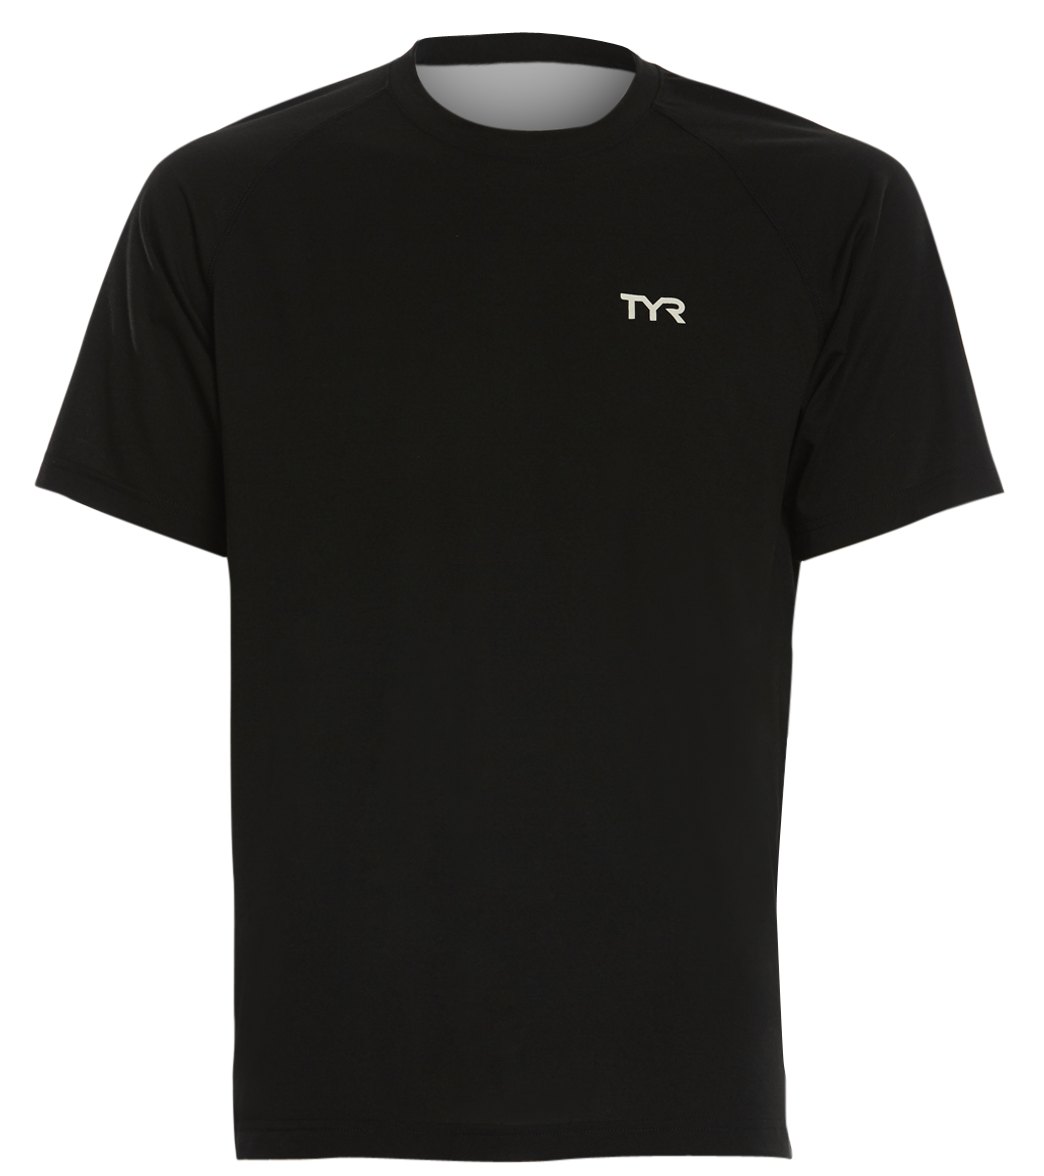 TYR Men's Alliance Tech Tee Shirt - Black Large Polyester/Spandex - Swimoutlet.com